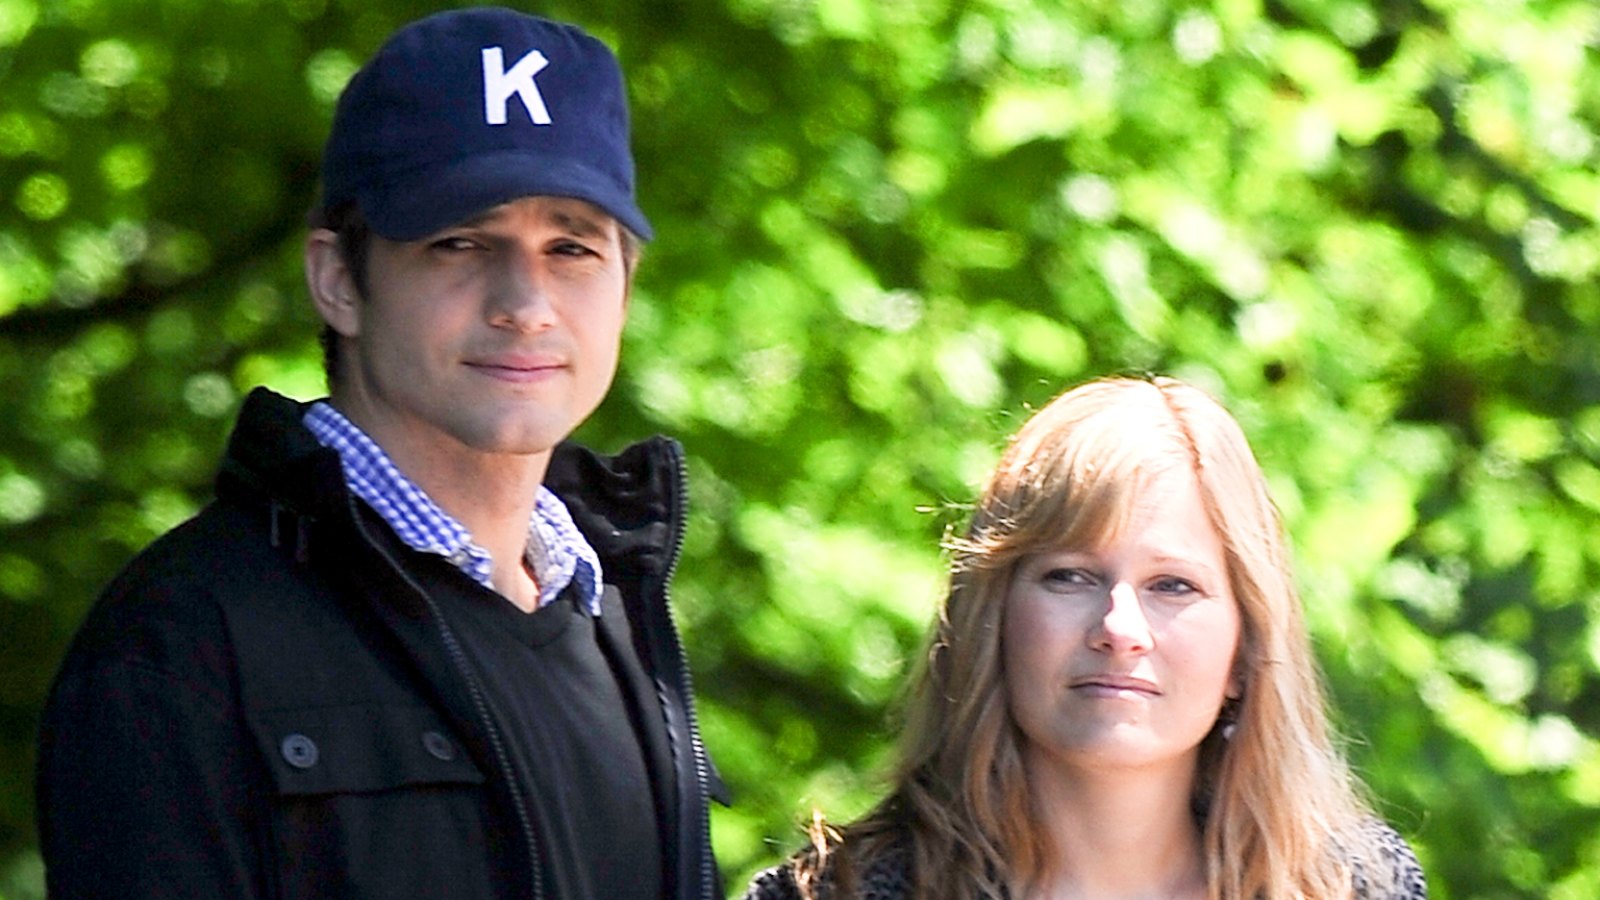 Ashton Kutcher and his sister Tausha Kutcher in June 2013.